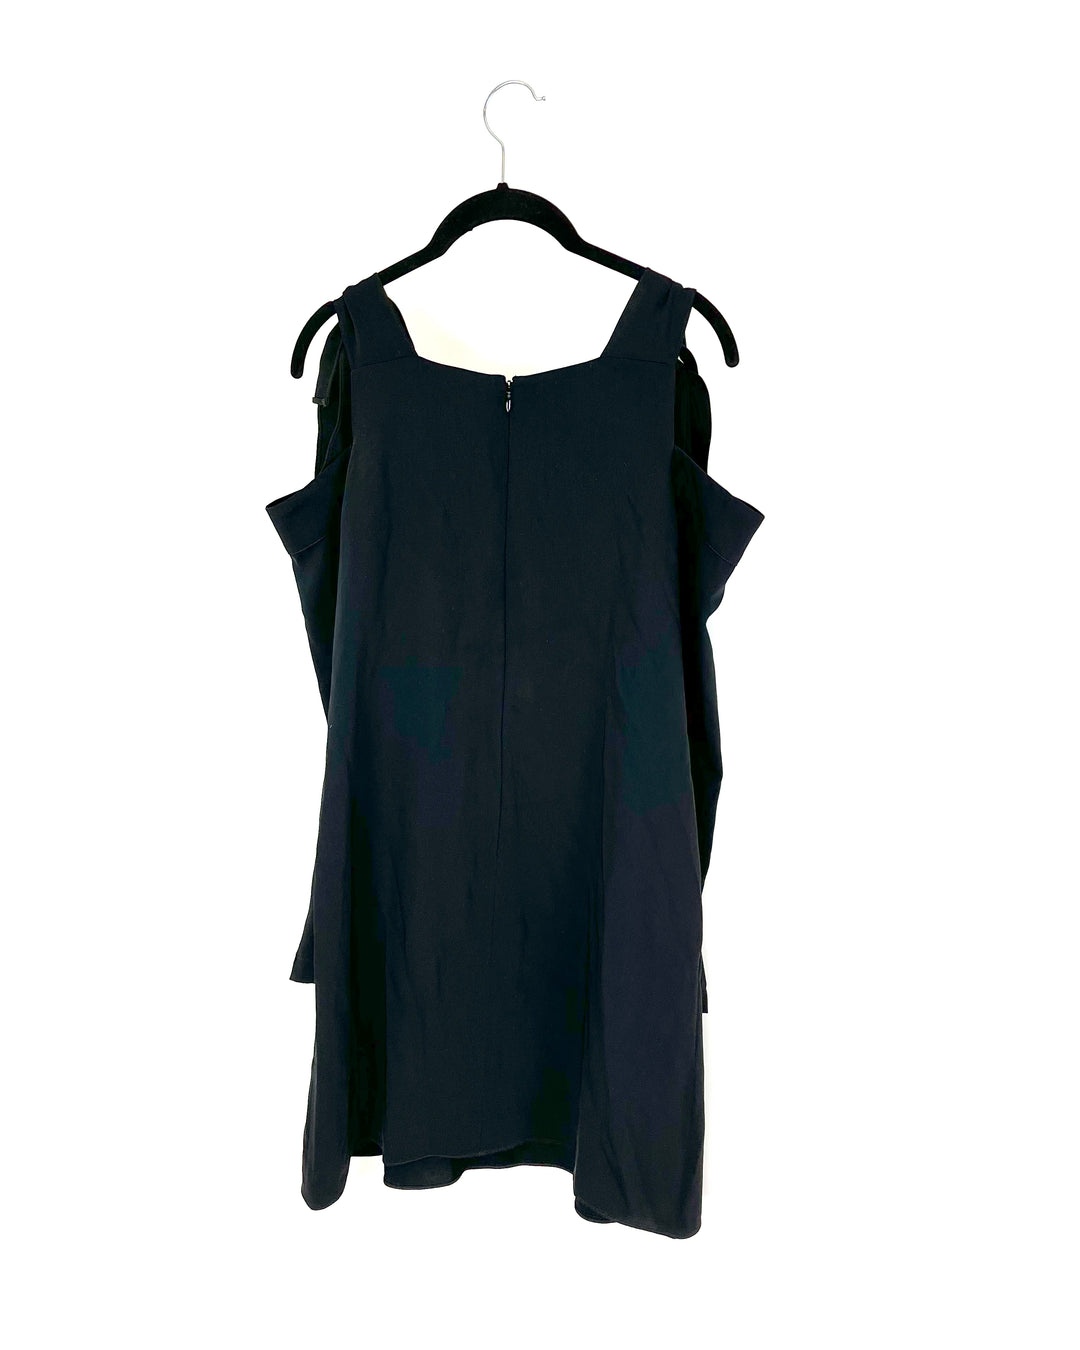 Black Cold Shoulder Long Sleeve Dress - Small